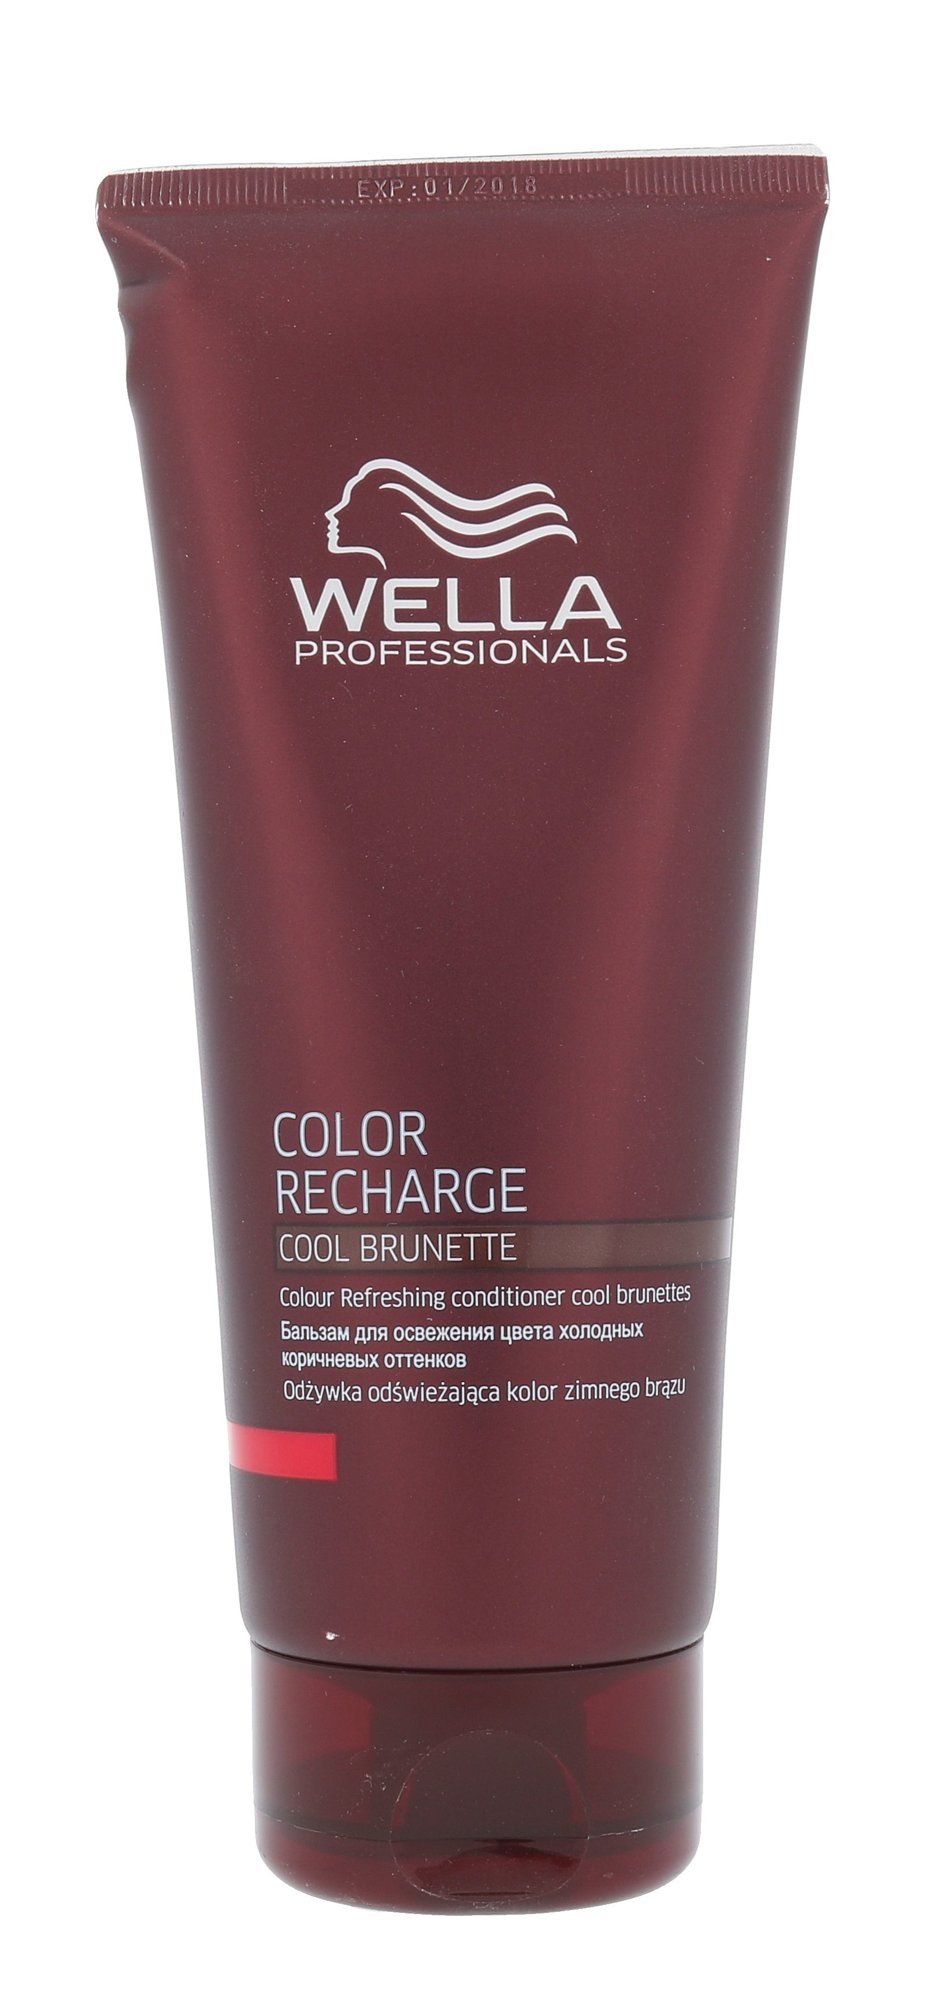 Wella Color Recharge Cool Brunette kondicionierius